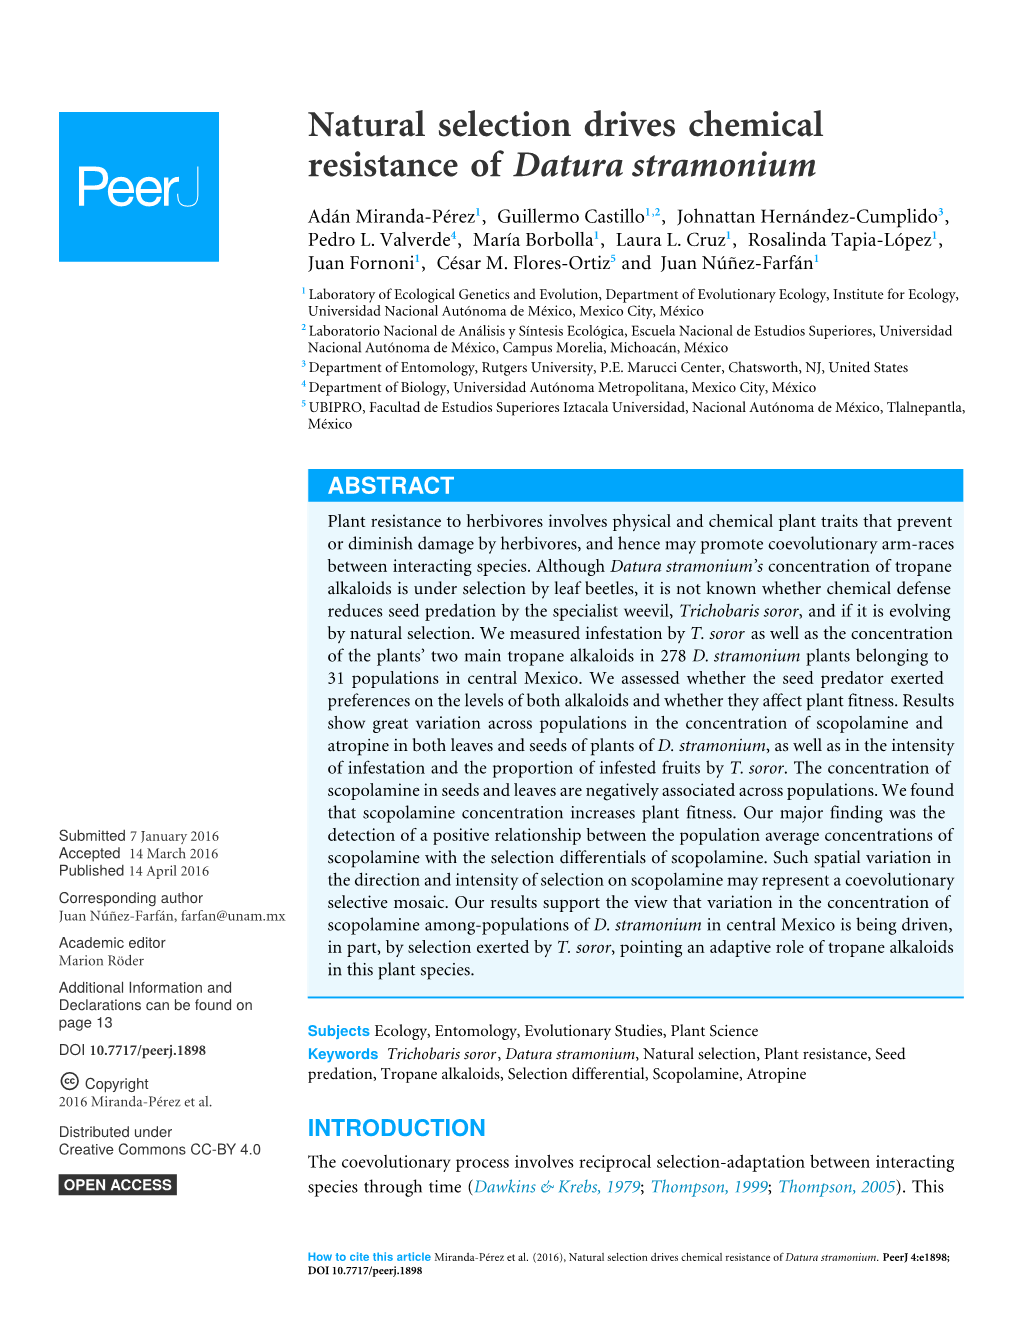 Natural Selection Drives Chemical Resistance of Datura Stramonium